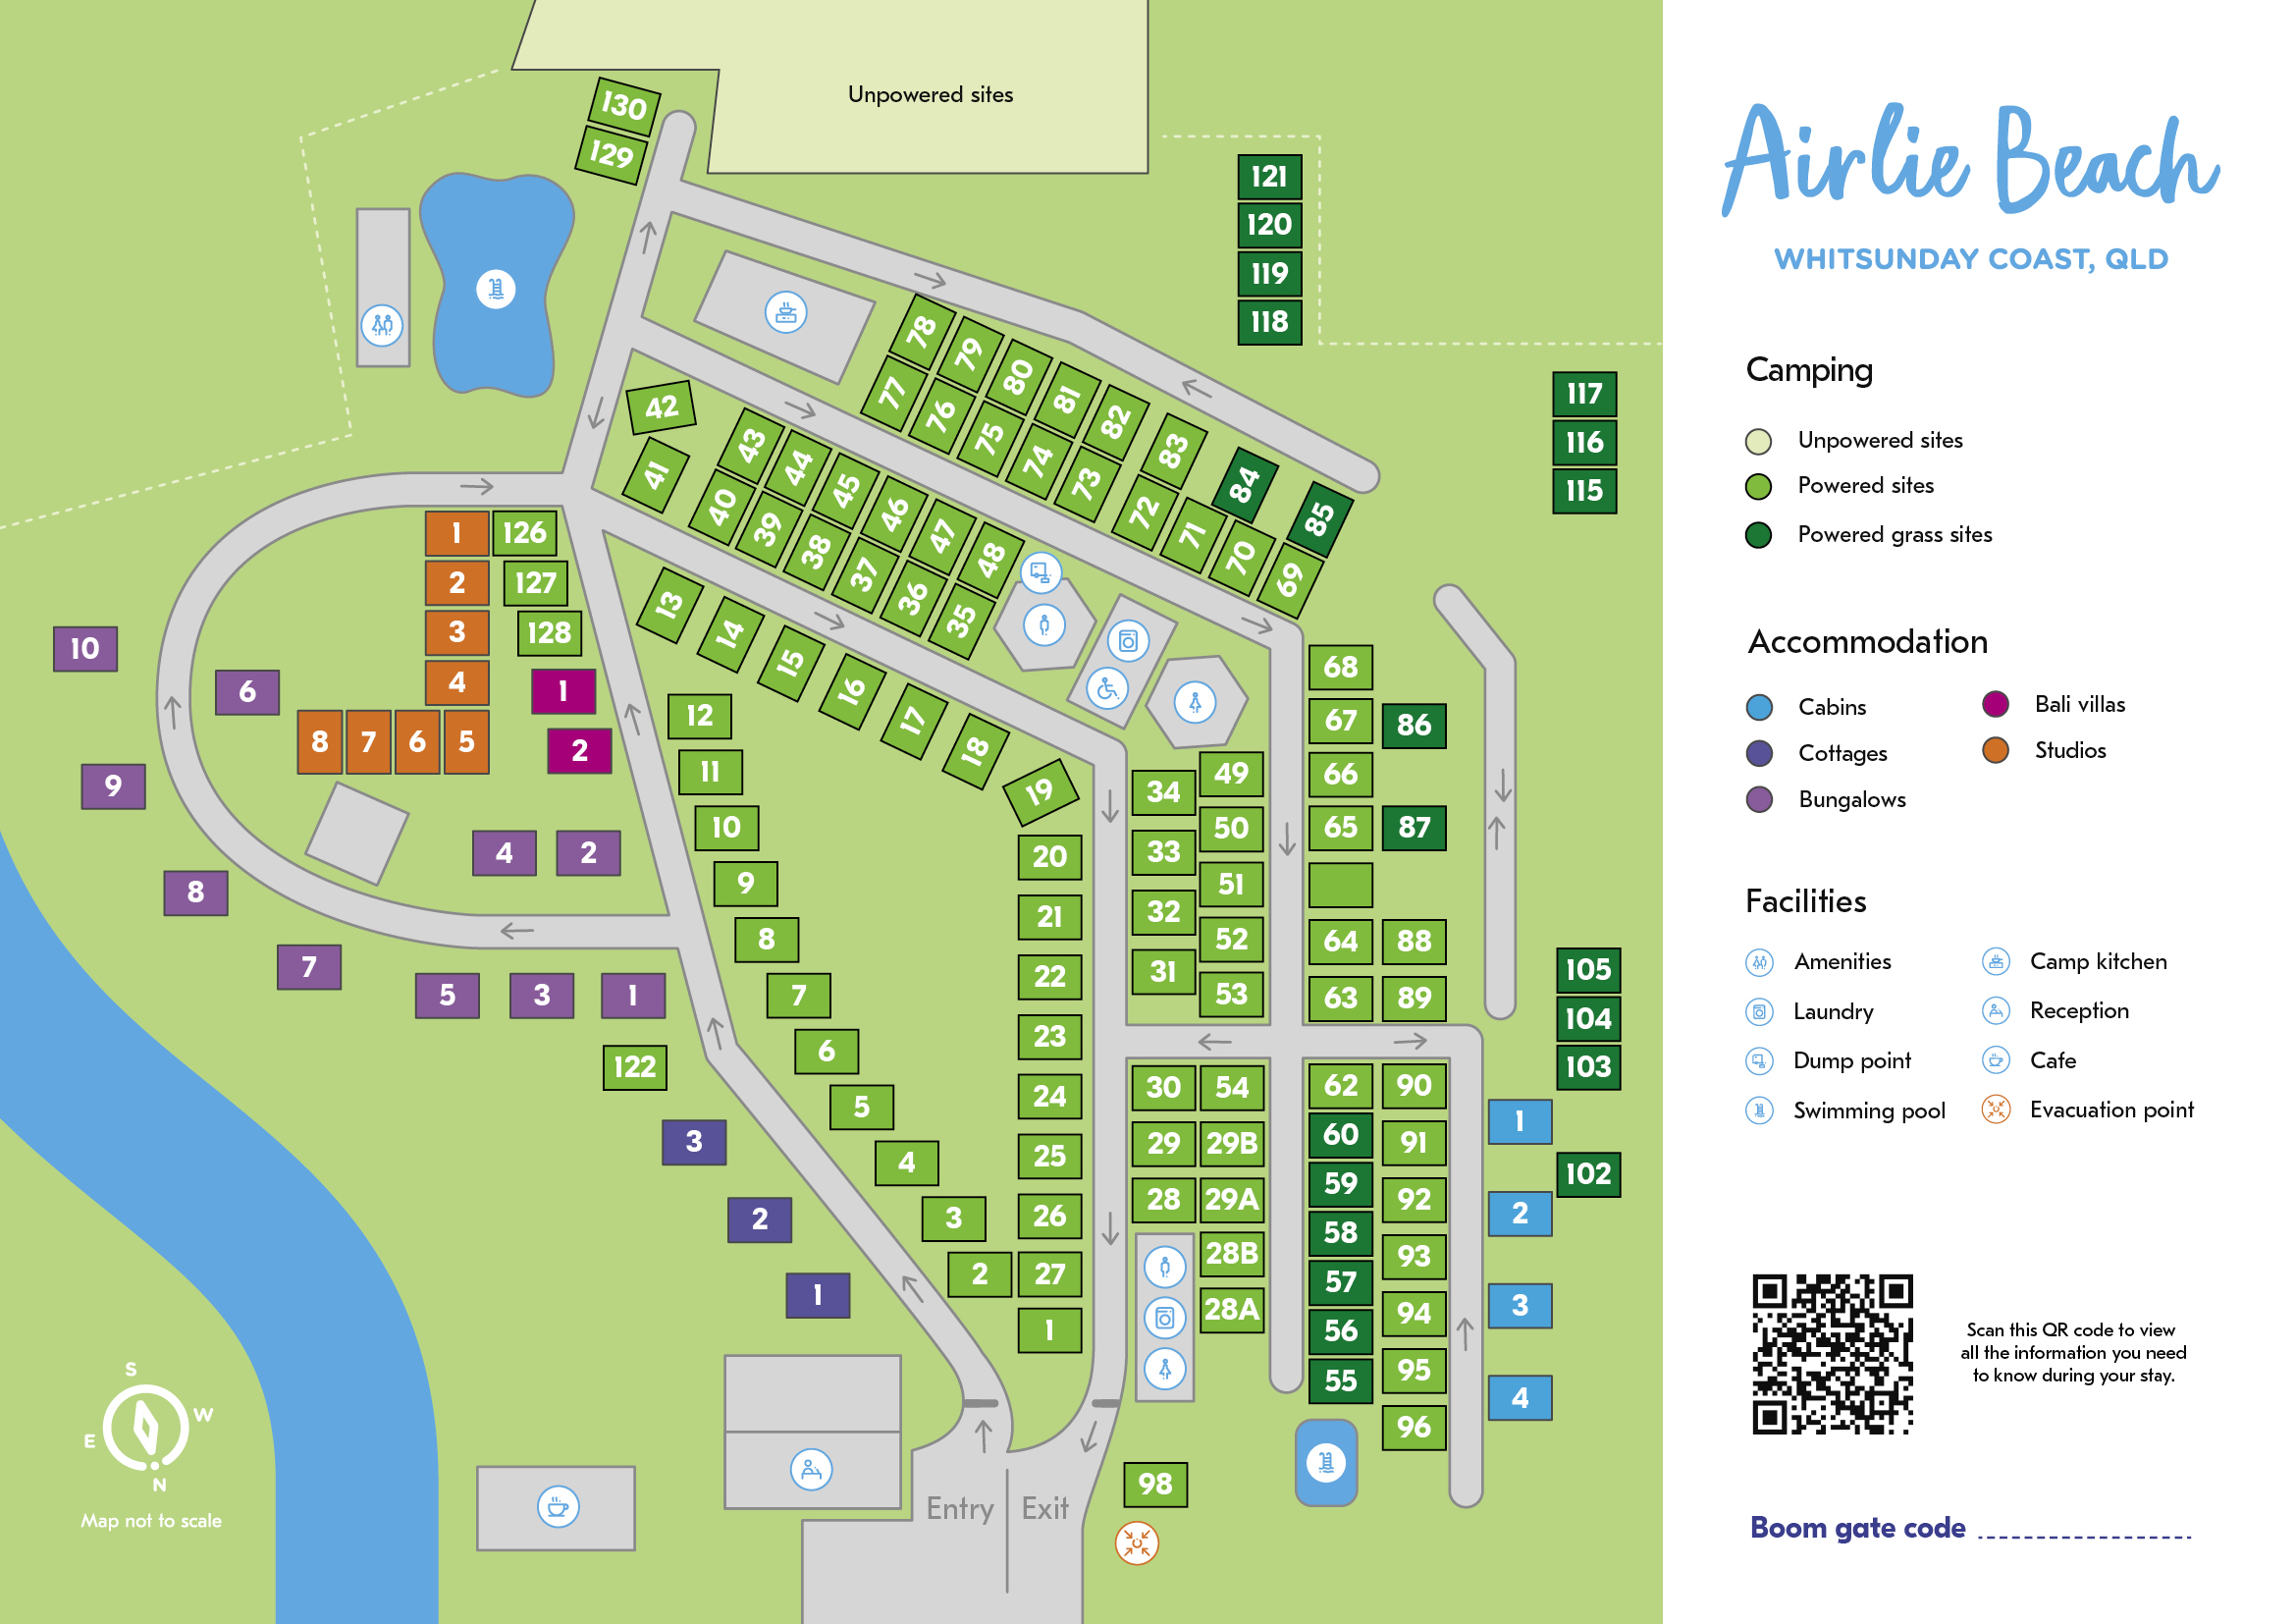 Airlie Beach park map